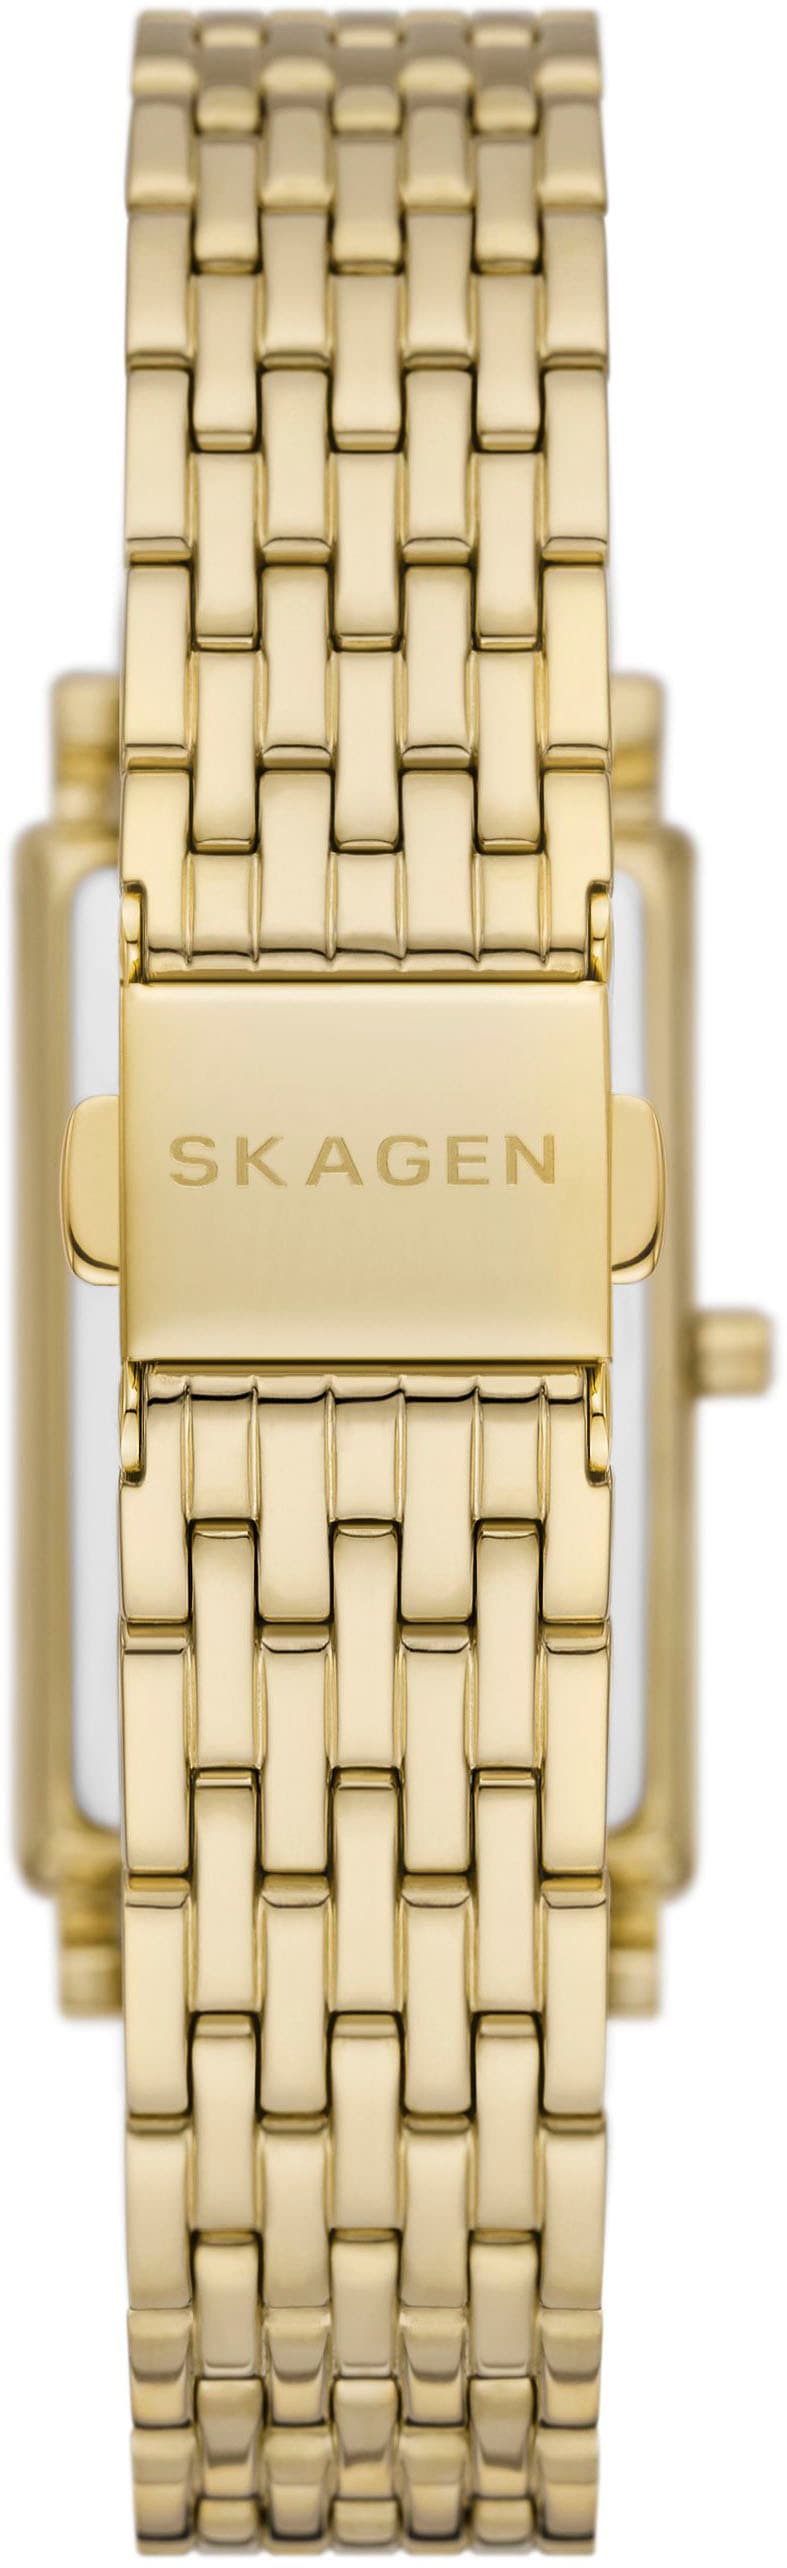 Skagen Quarzuhr »HAGEN, SKW3113«, Armbanduhr, Damenuhr, analog, Edelstahlarmband